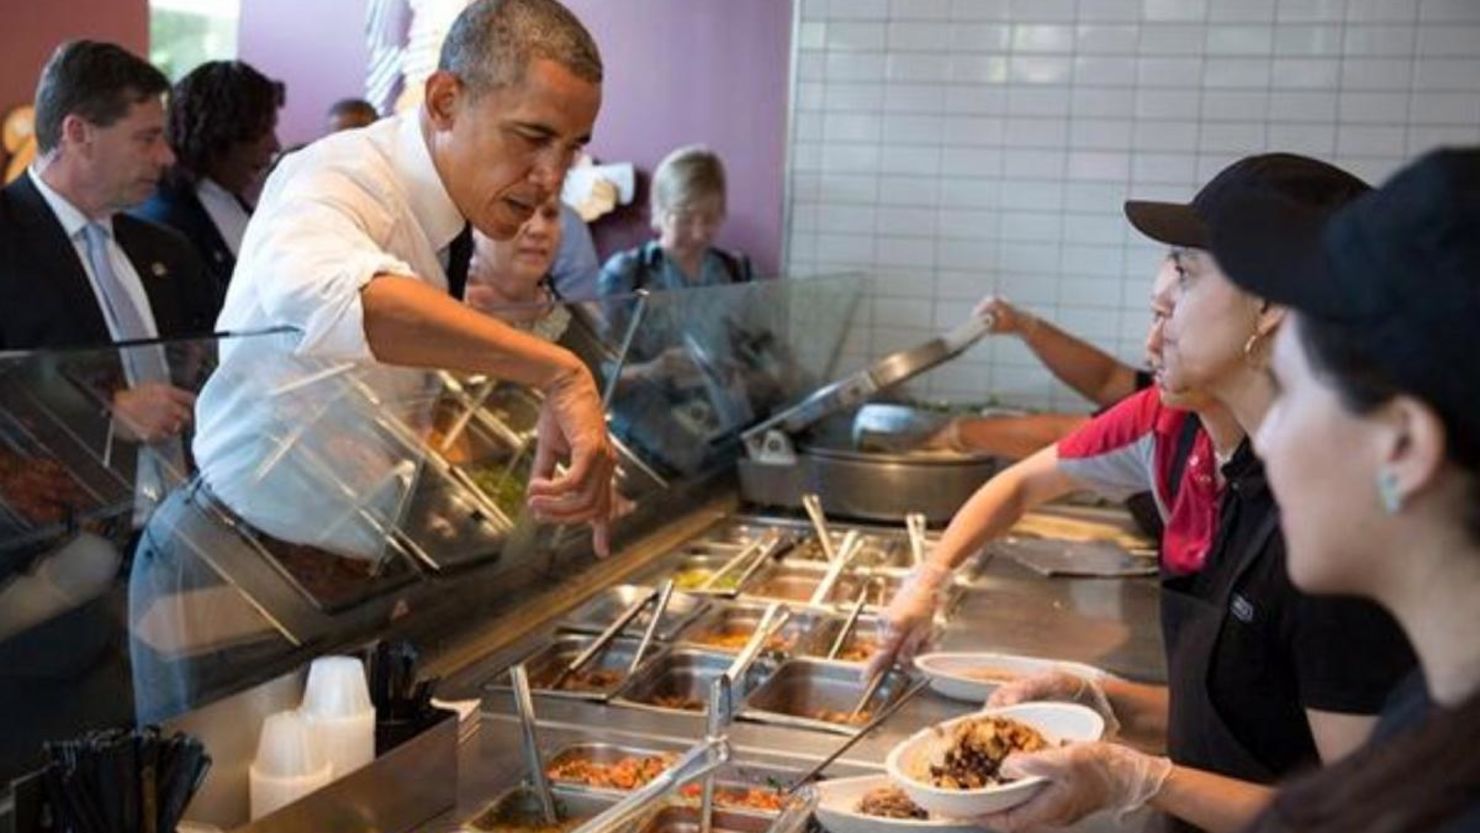 Obama visits Chipotle